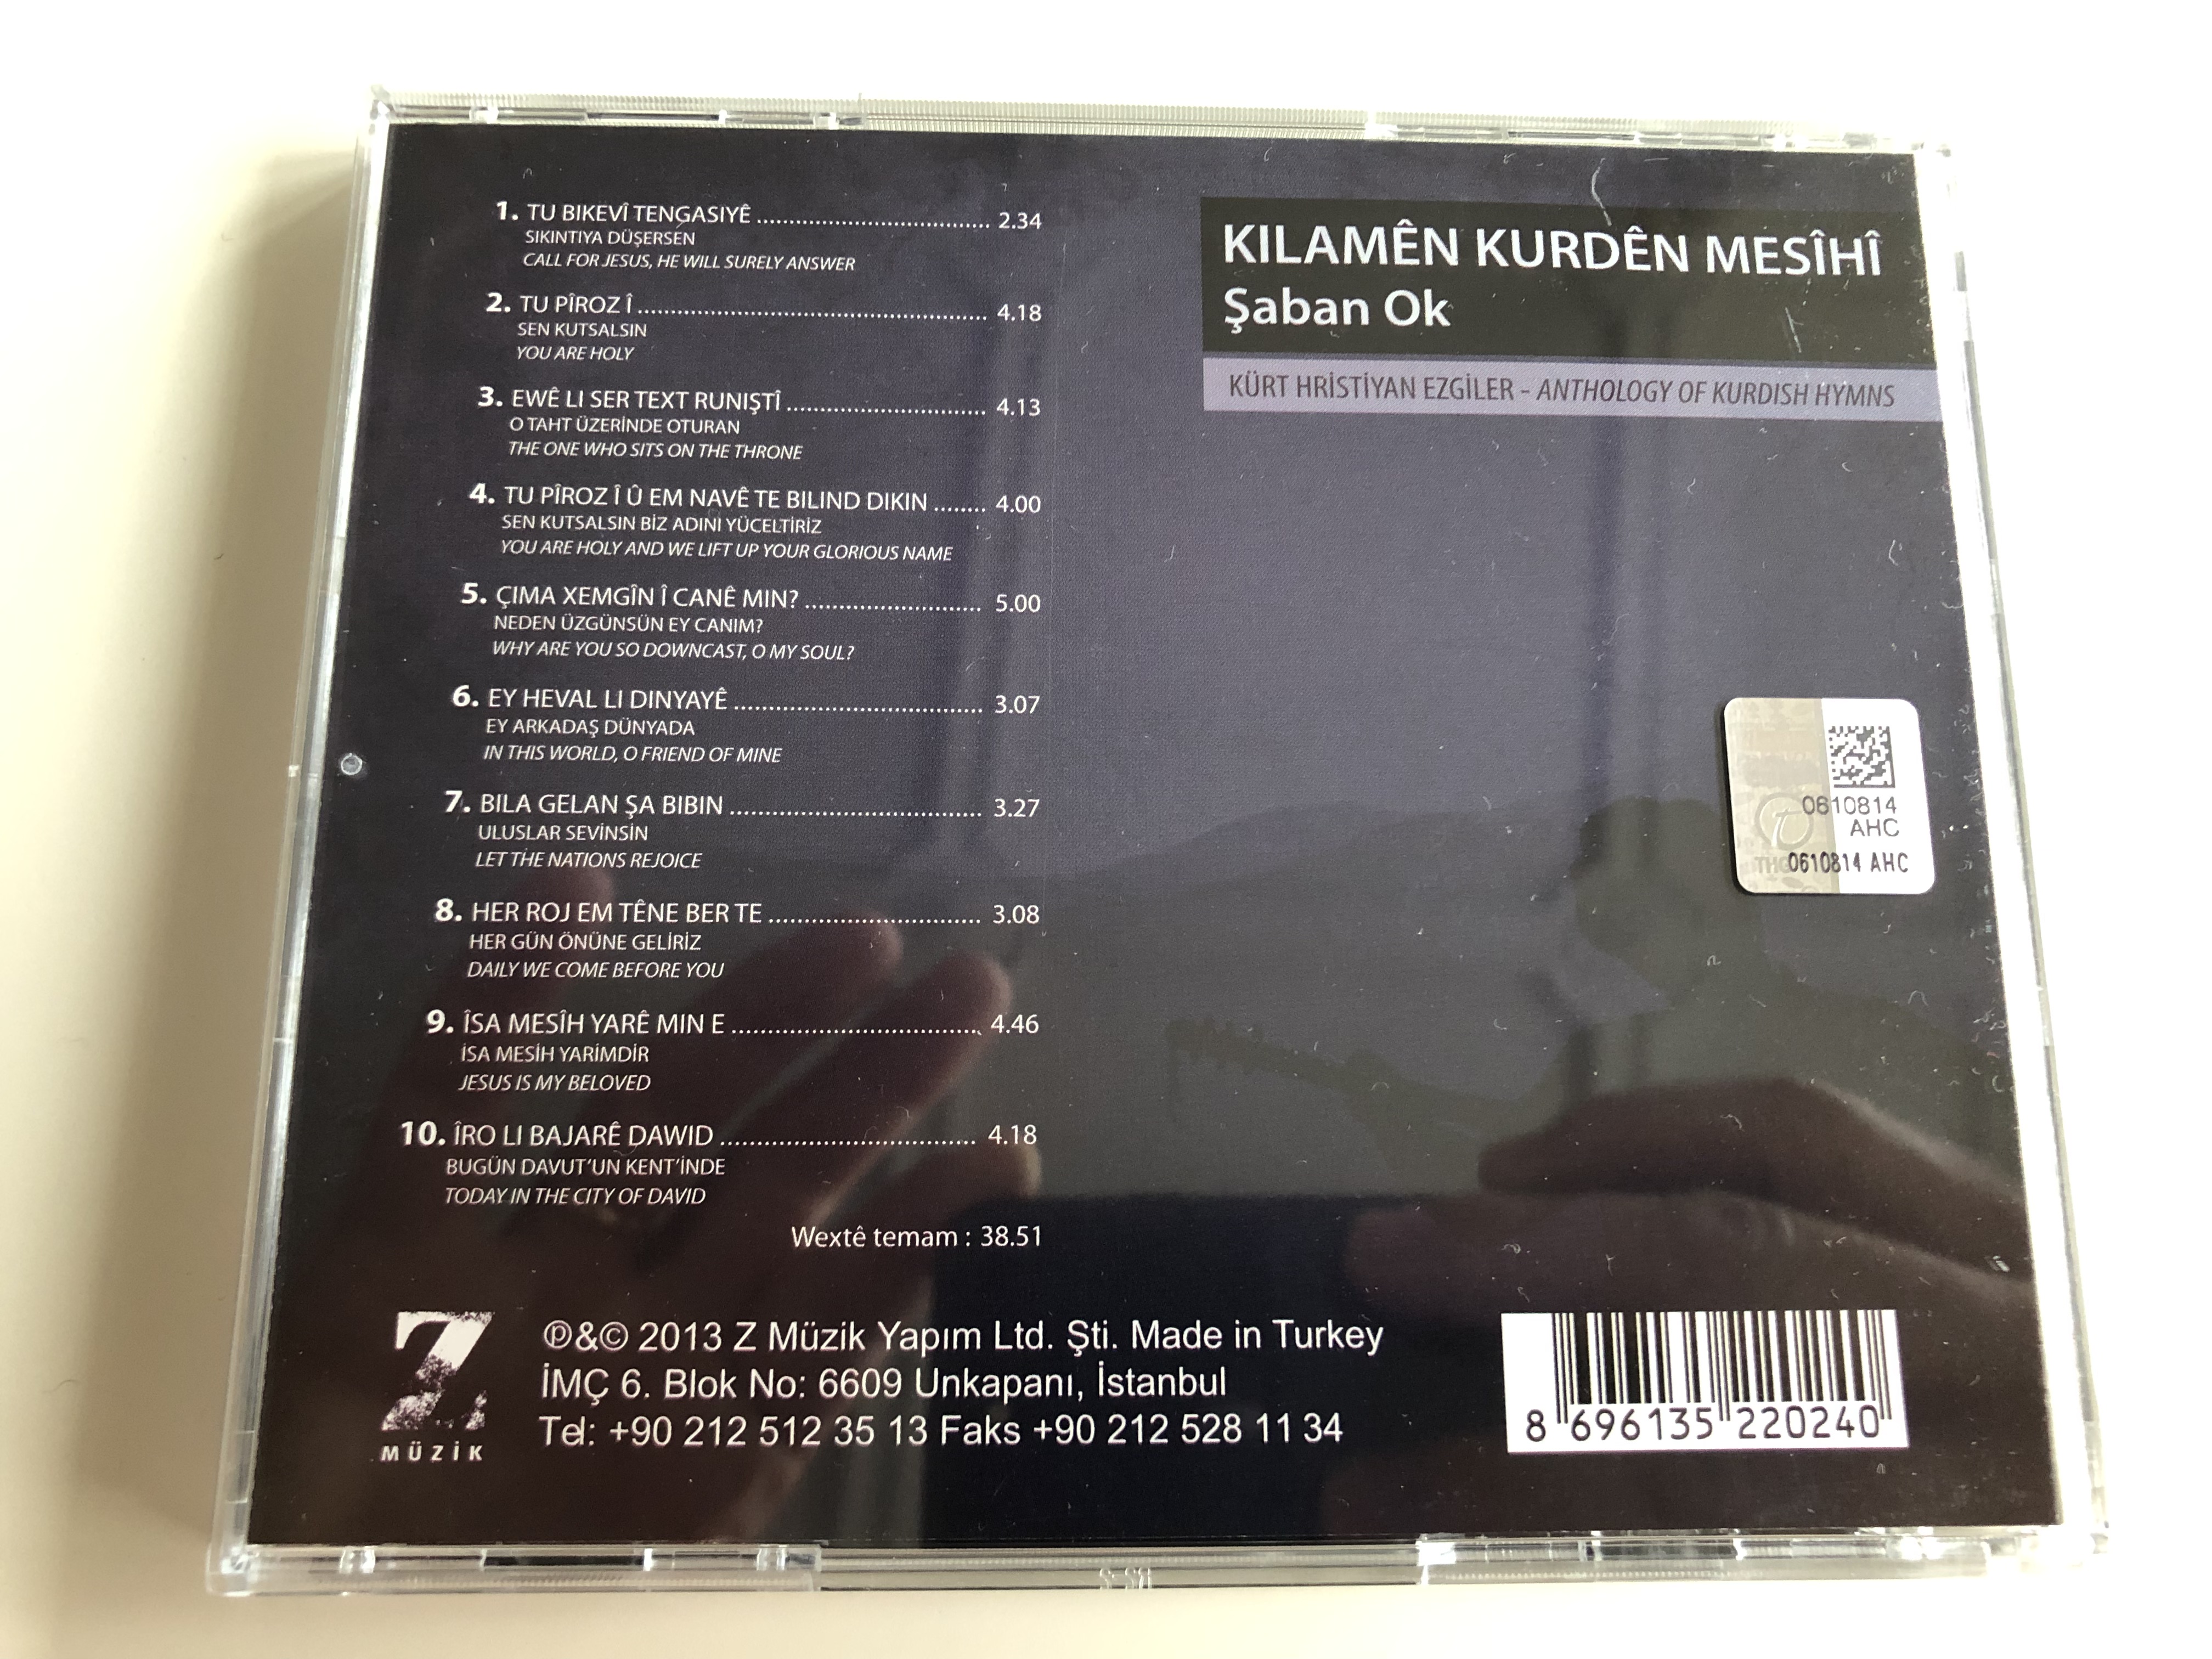 k-rt-hr-st-yan-ezg-ler-cd-aban-ok-anthology-of-kurdish-hymns-turkish-cd-2013-17-.jpg